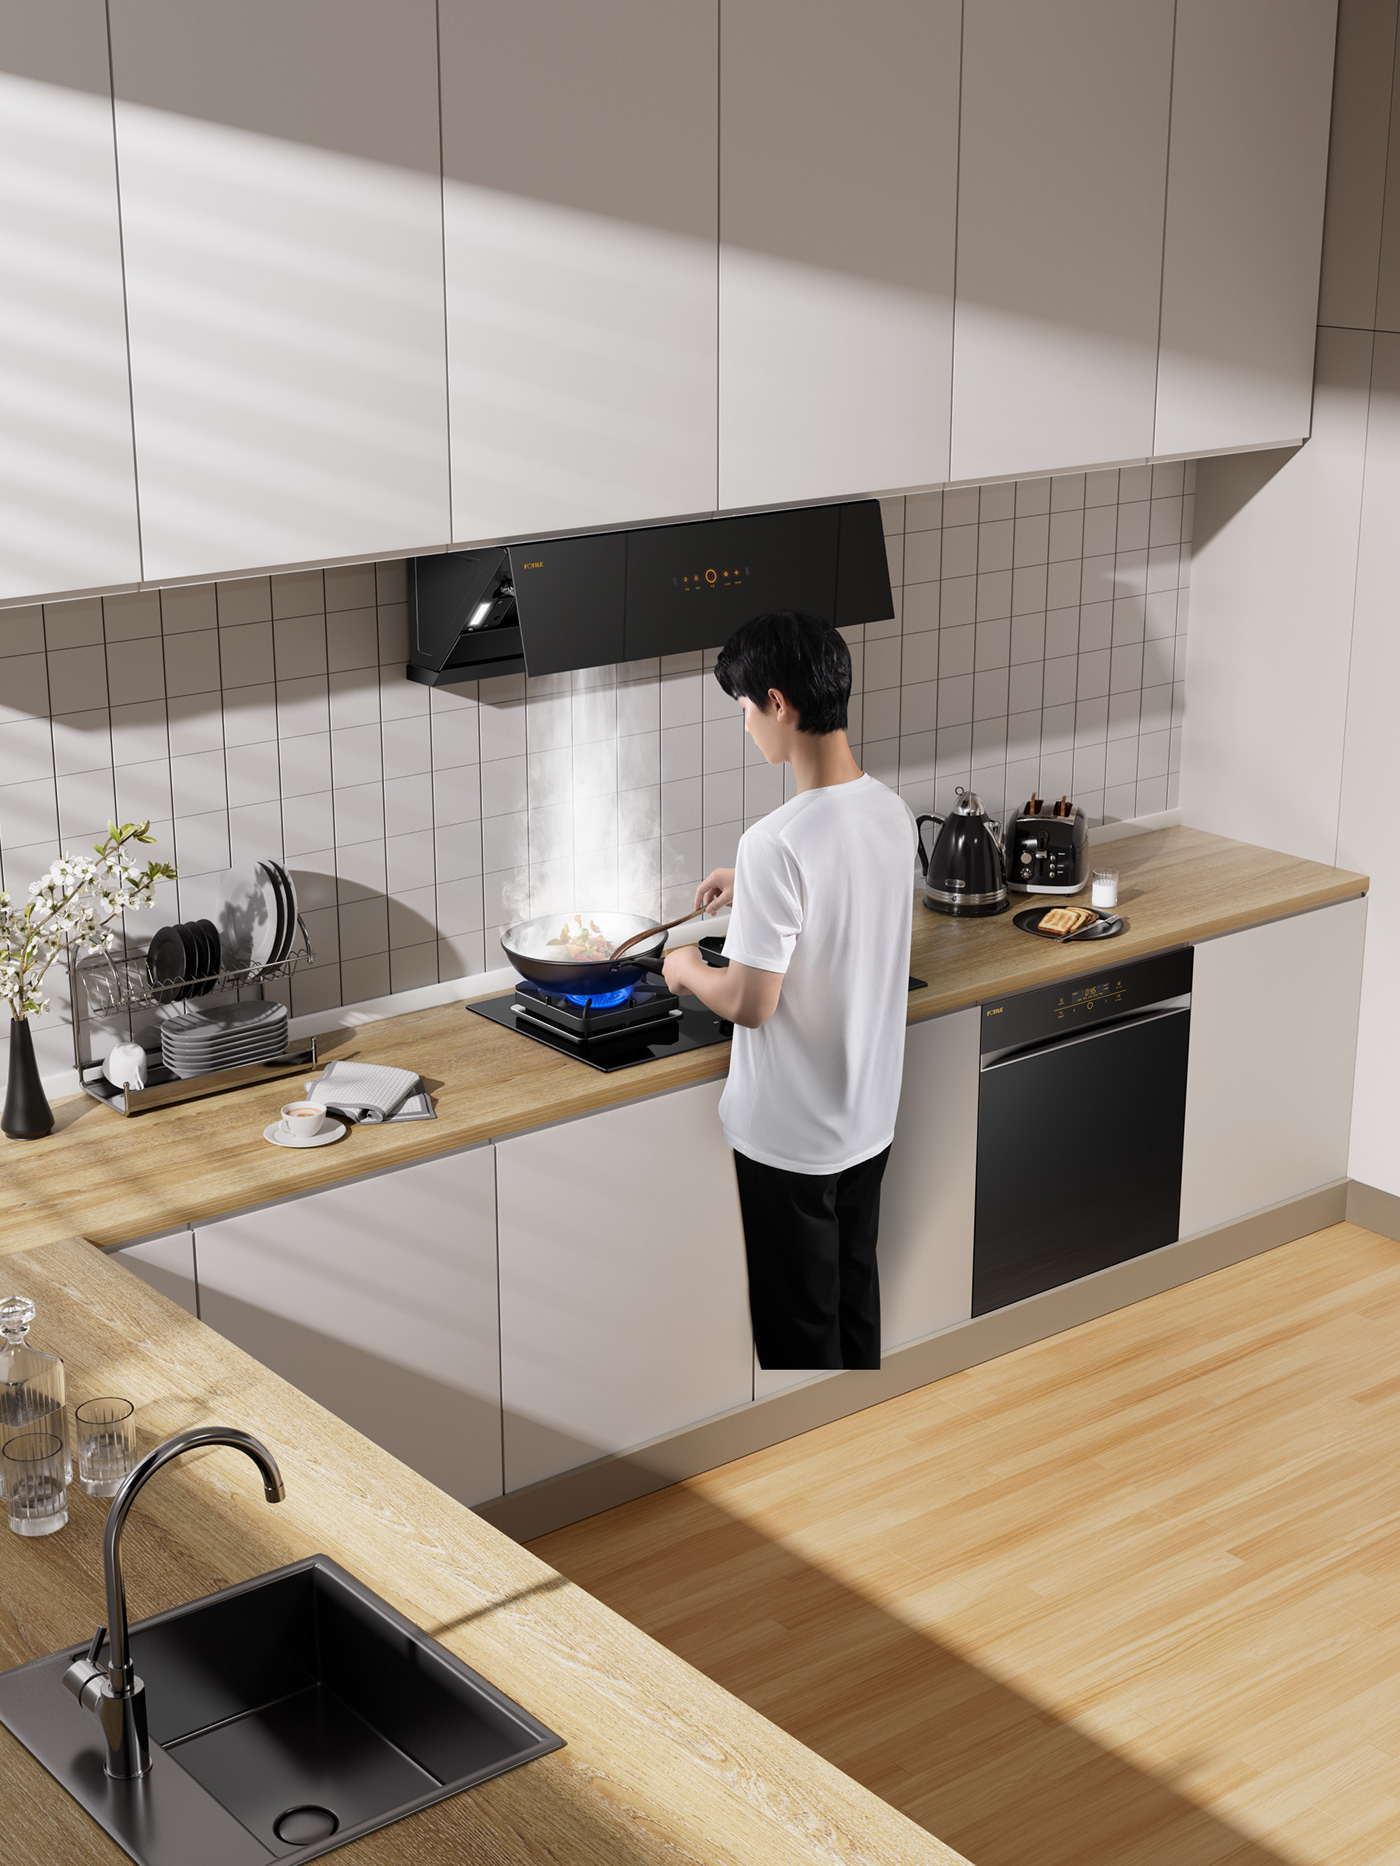 Kitchen Appliance 3D rendering kitchen oven dishwasher gas stove kitchen hood scene